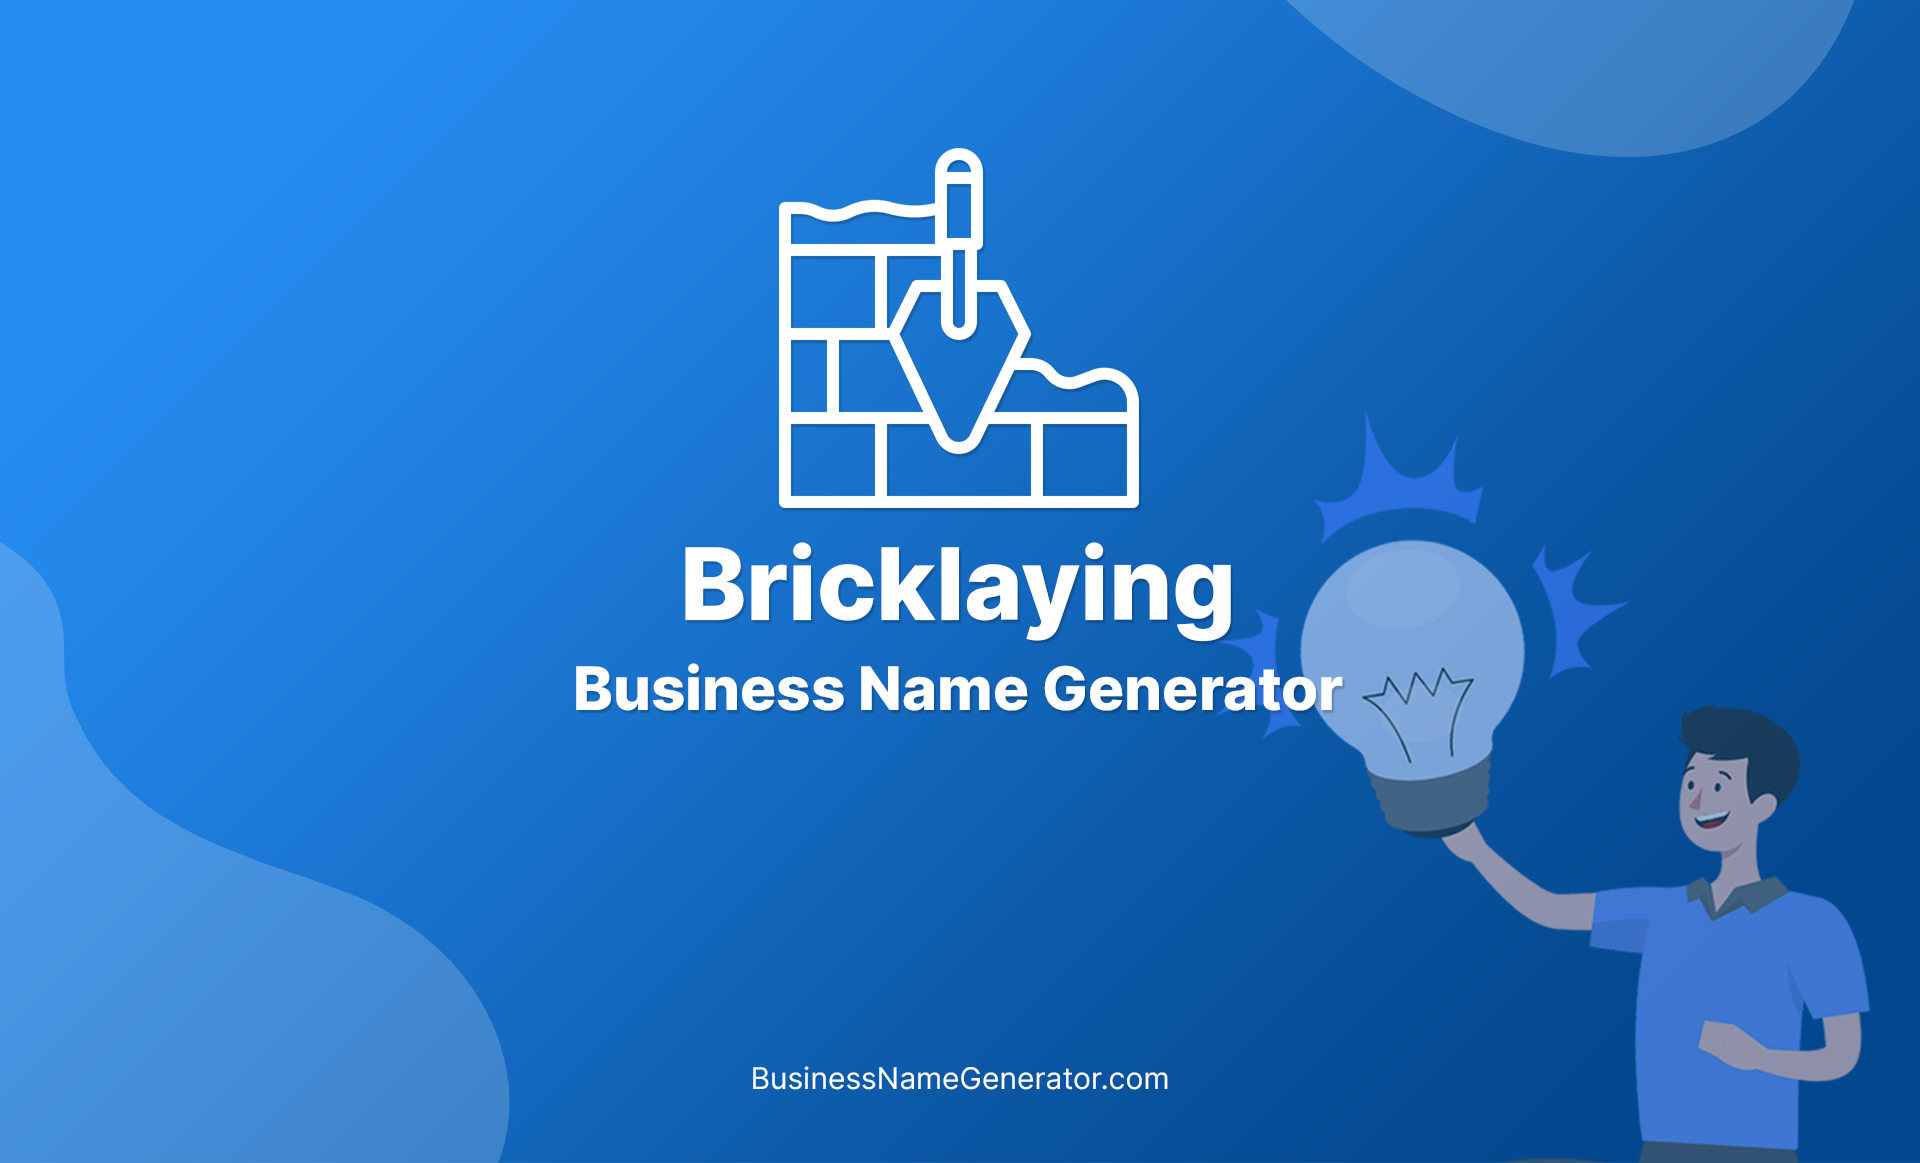 Bricklaying Business Name Generator